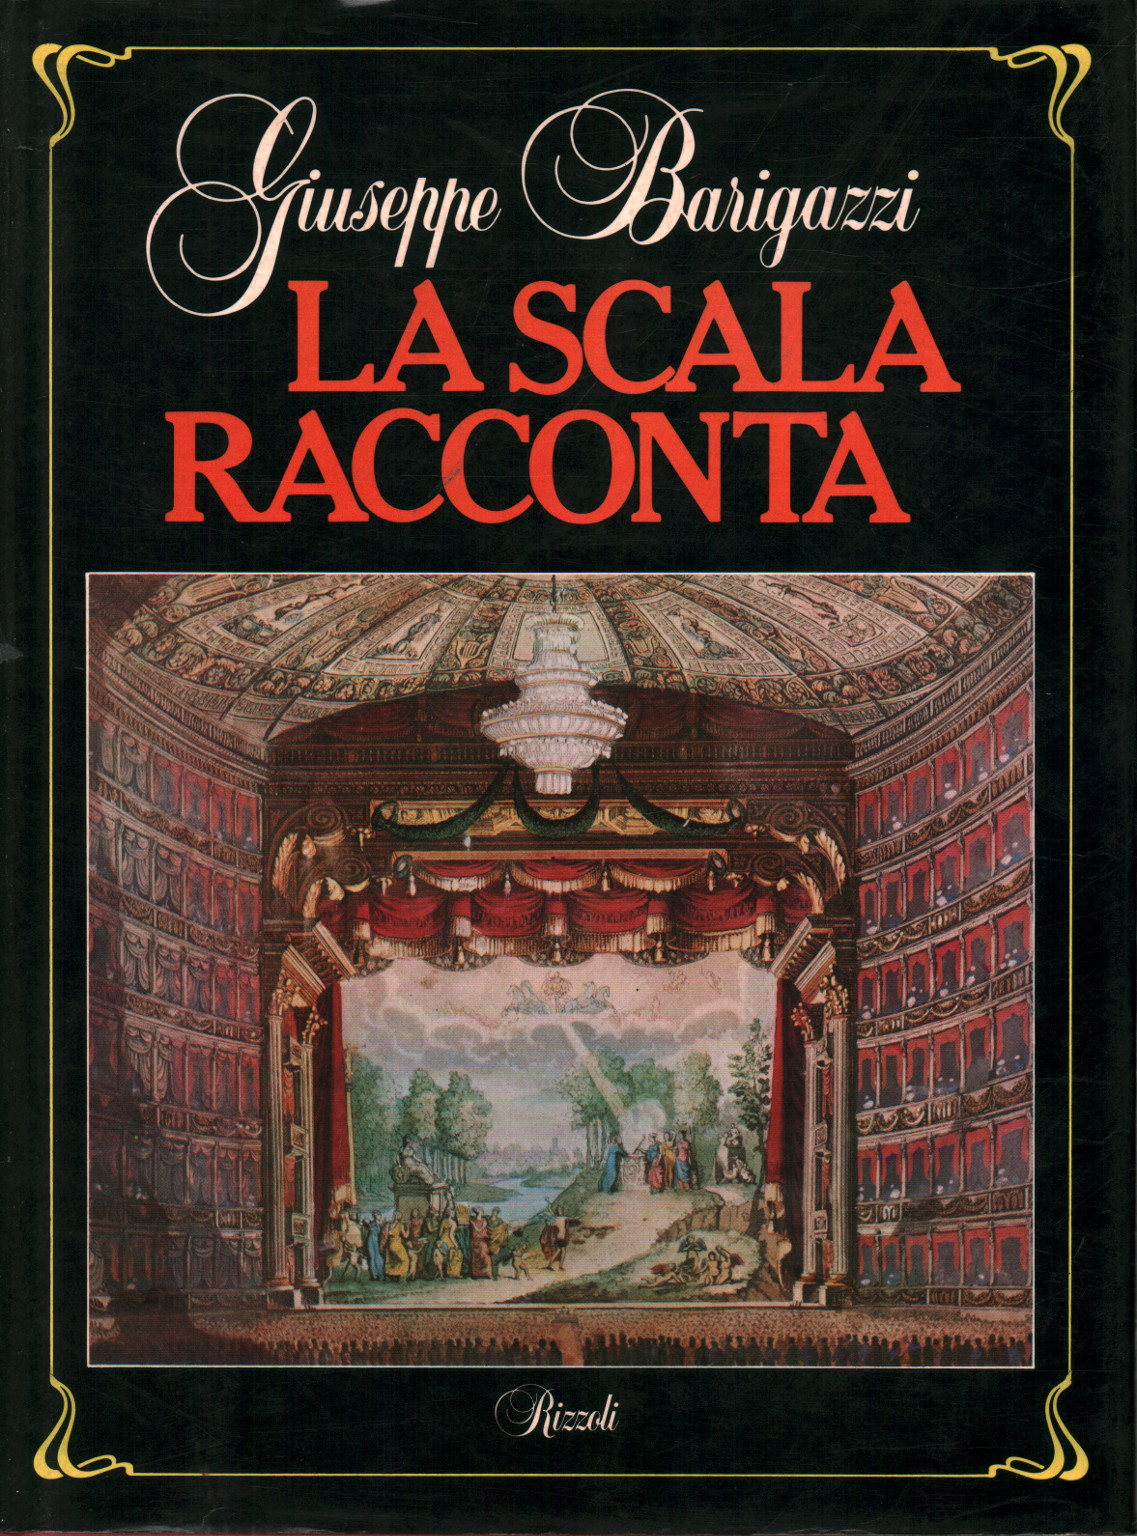 The Scale tells the story, Giuseppe Barigazzi